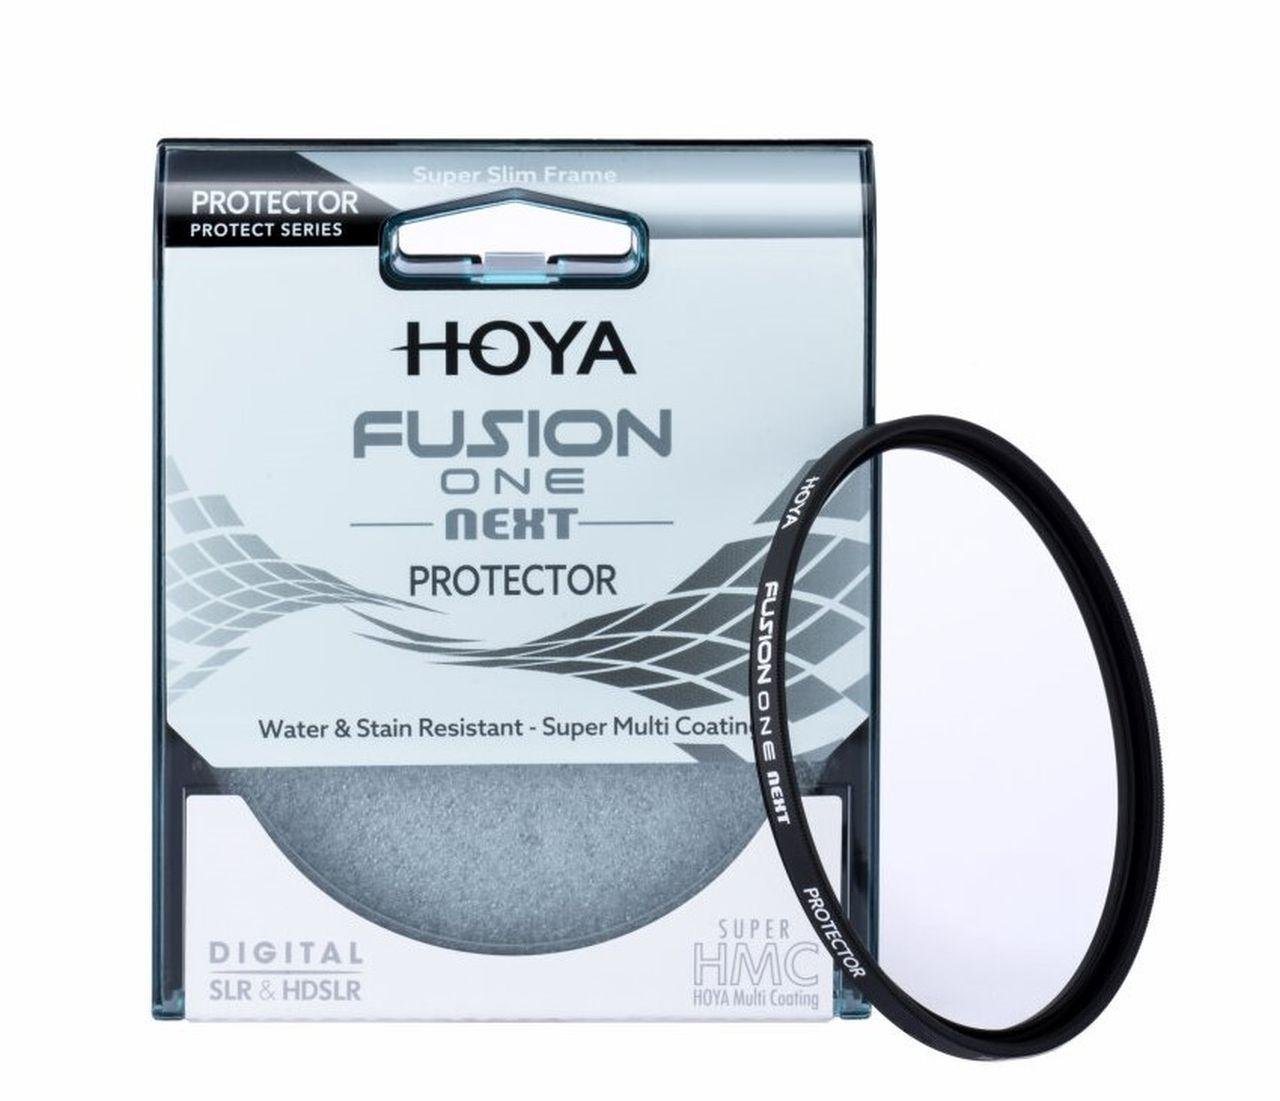 Hoya Fusion ONE Next Protector 49mm Objektivzubehör von Hoya